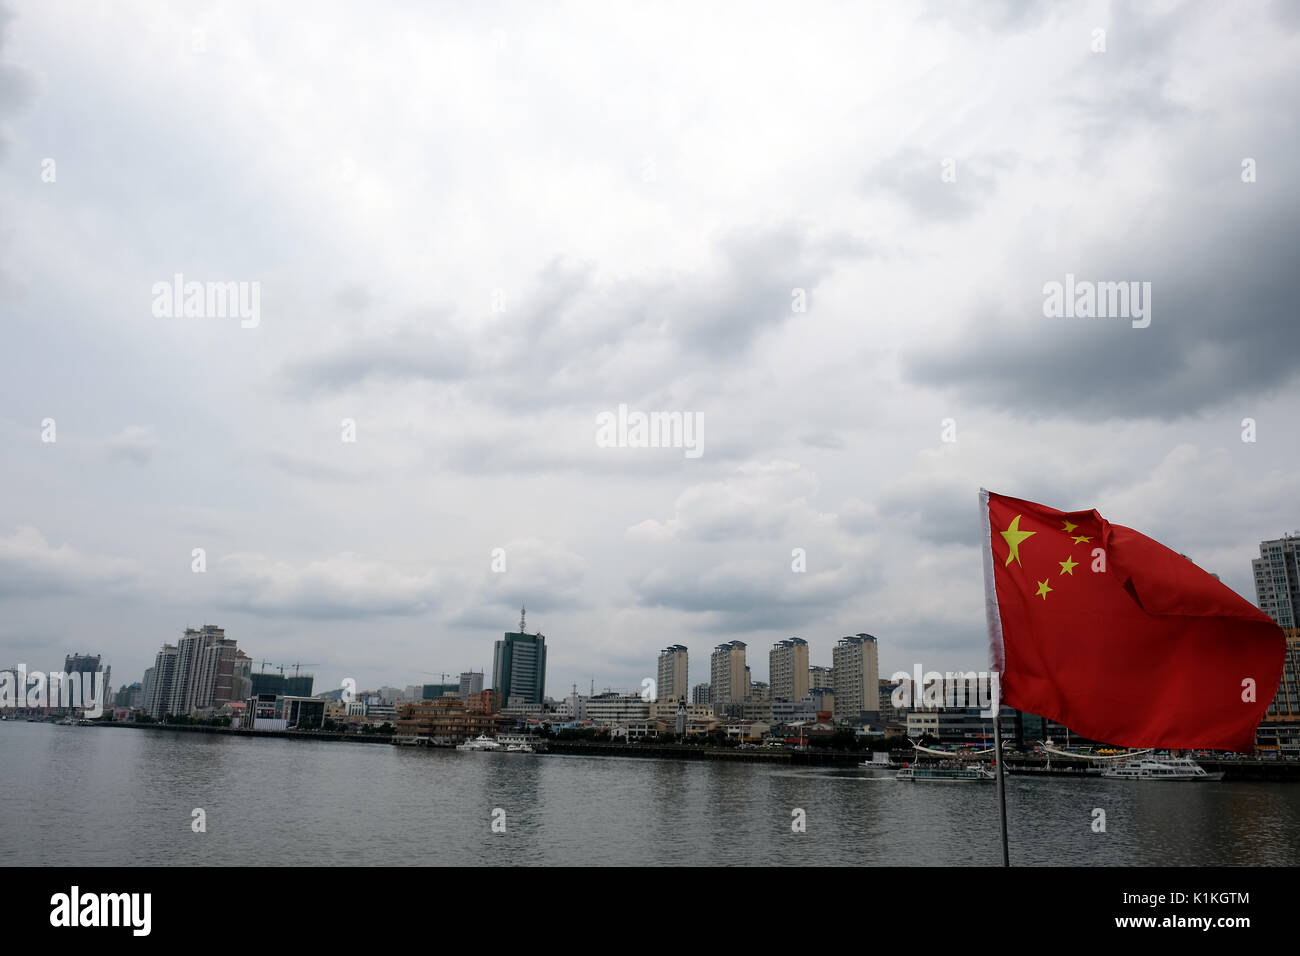 Dandong, Provinz Liaoning, China - 31. Juli 2017: Waterfront der Stadt Dandong auf der Yalu gegenüber Sinuiju, Nordkorea. Stockfoto